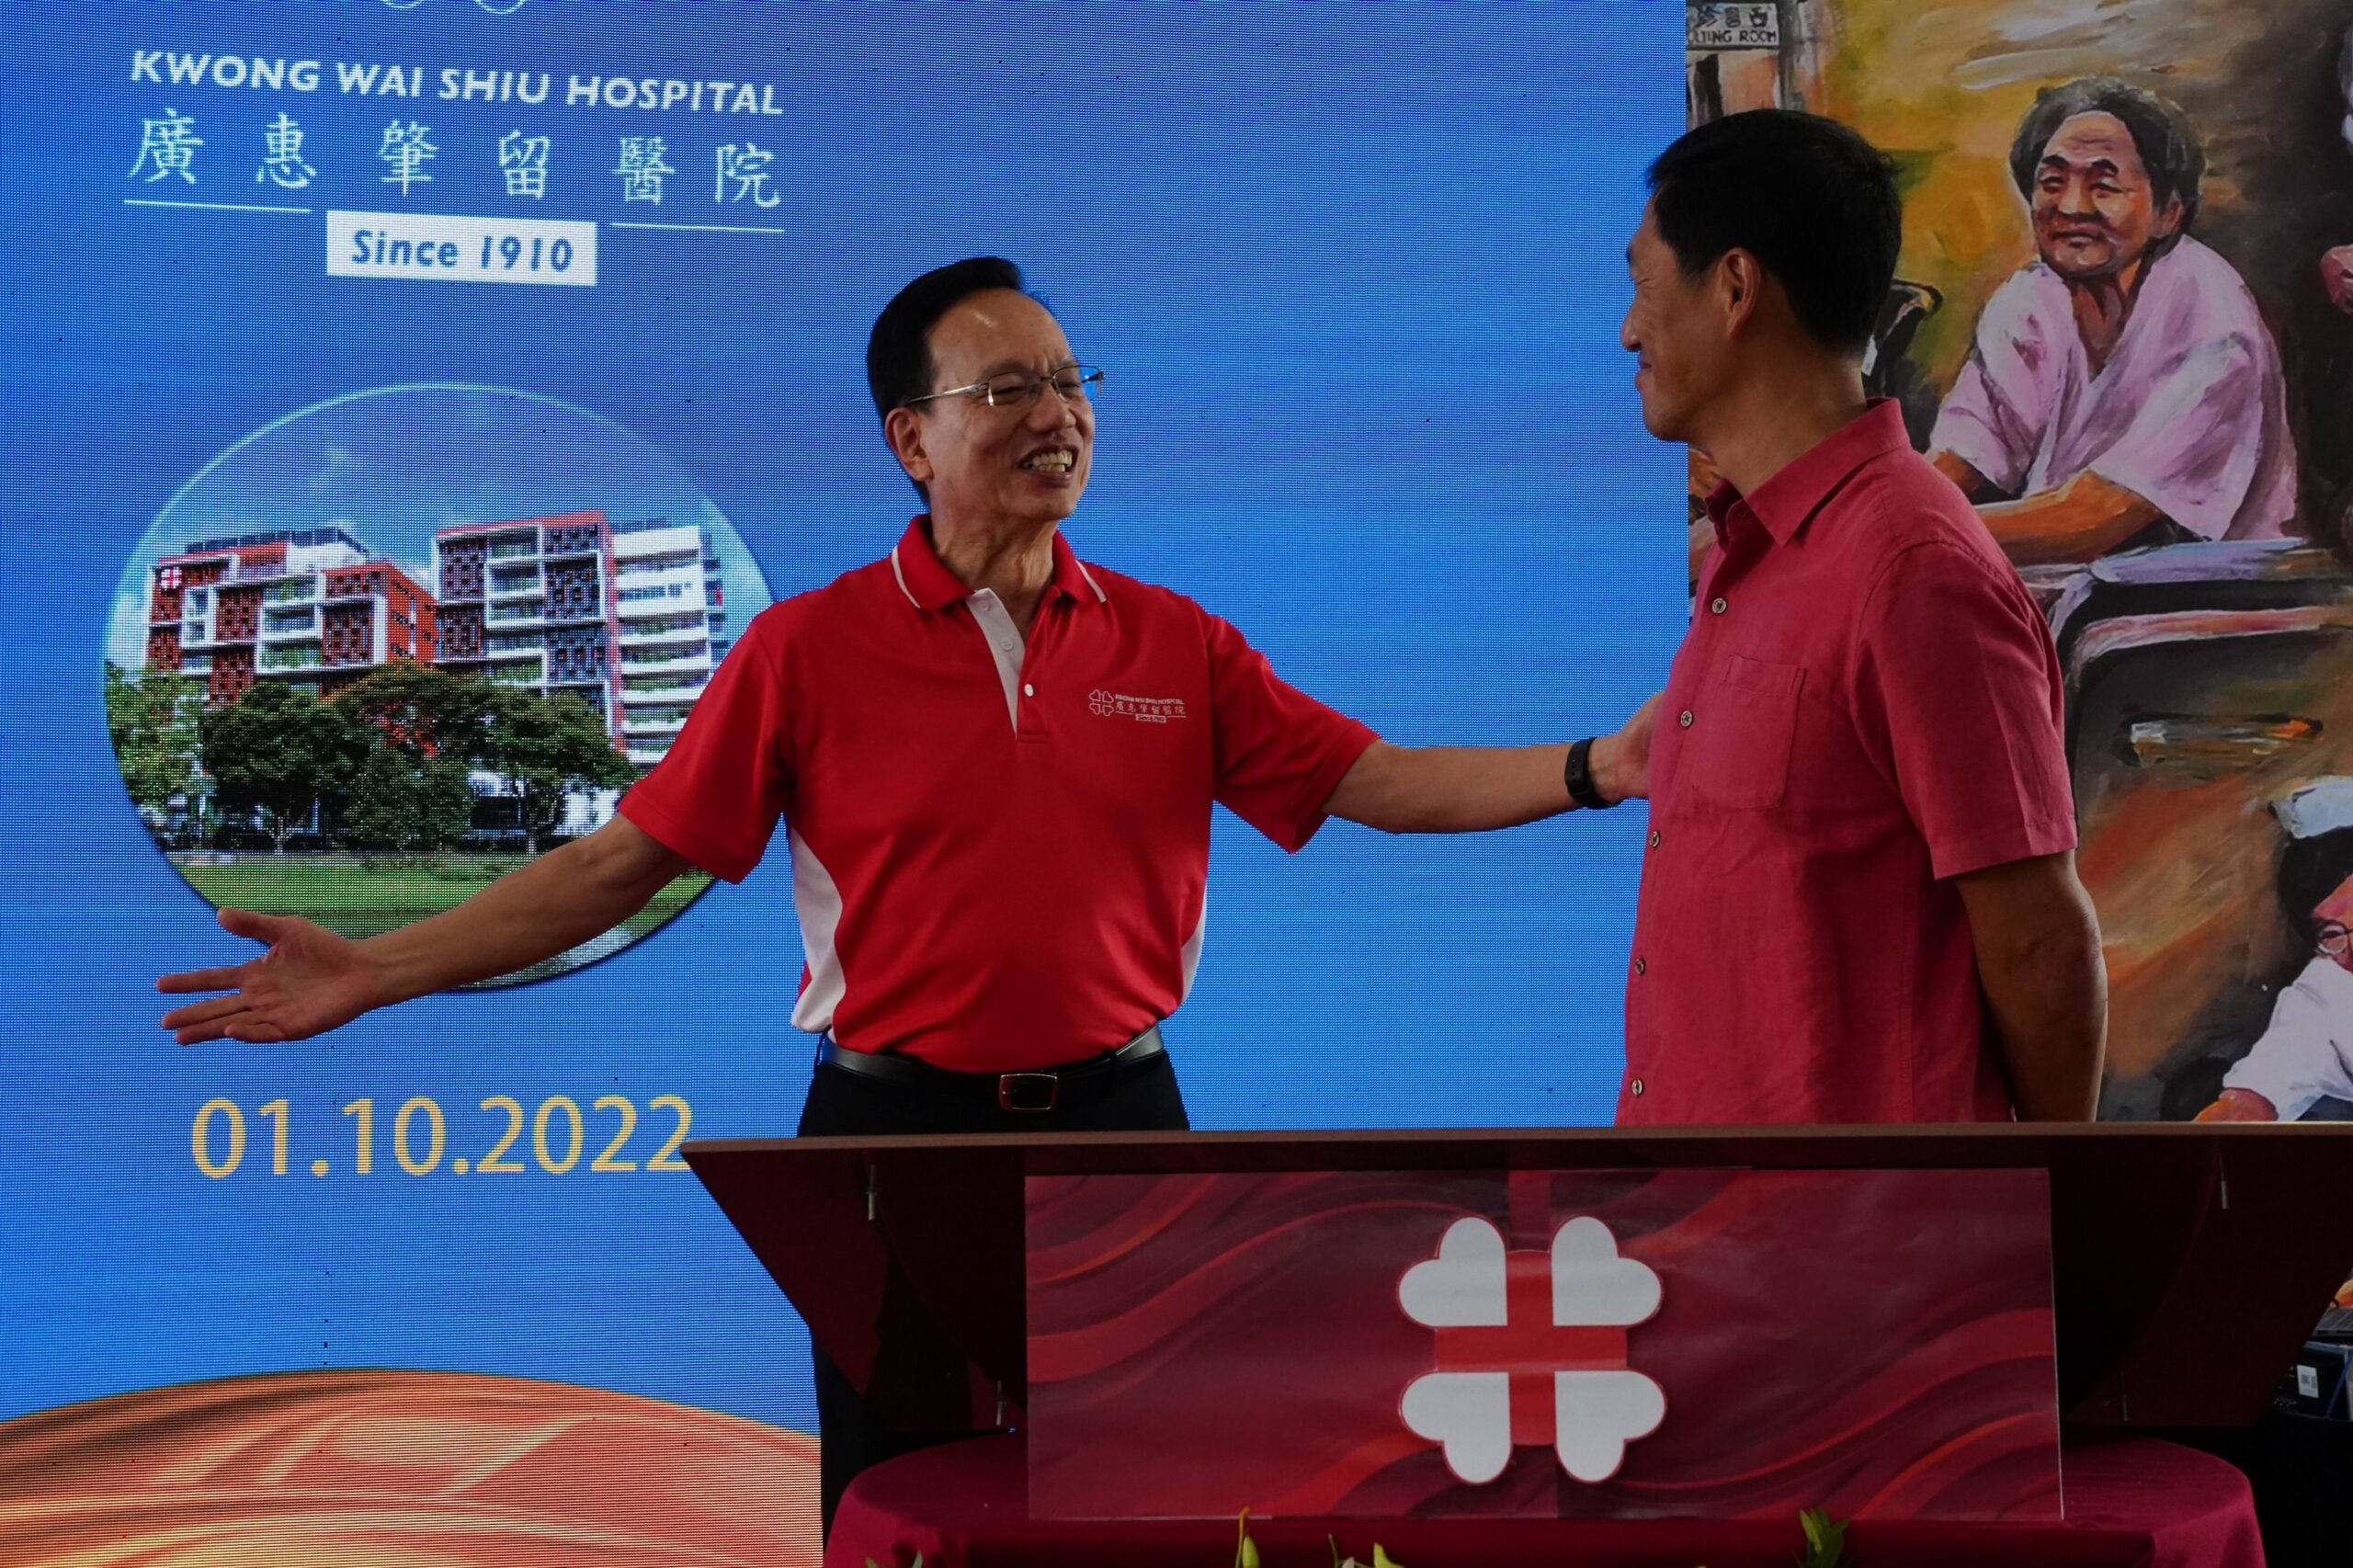 KWSH Celebrates 112th Anniversary as Kwong Wai Shiu Hospital @ Potong Pasir Officially Opened